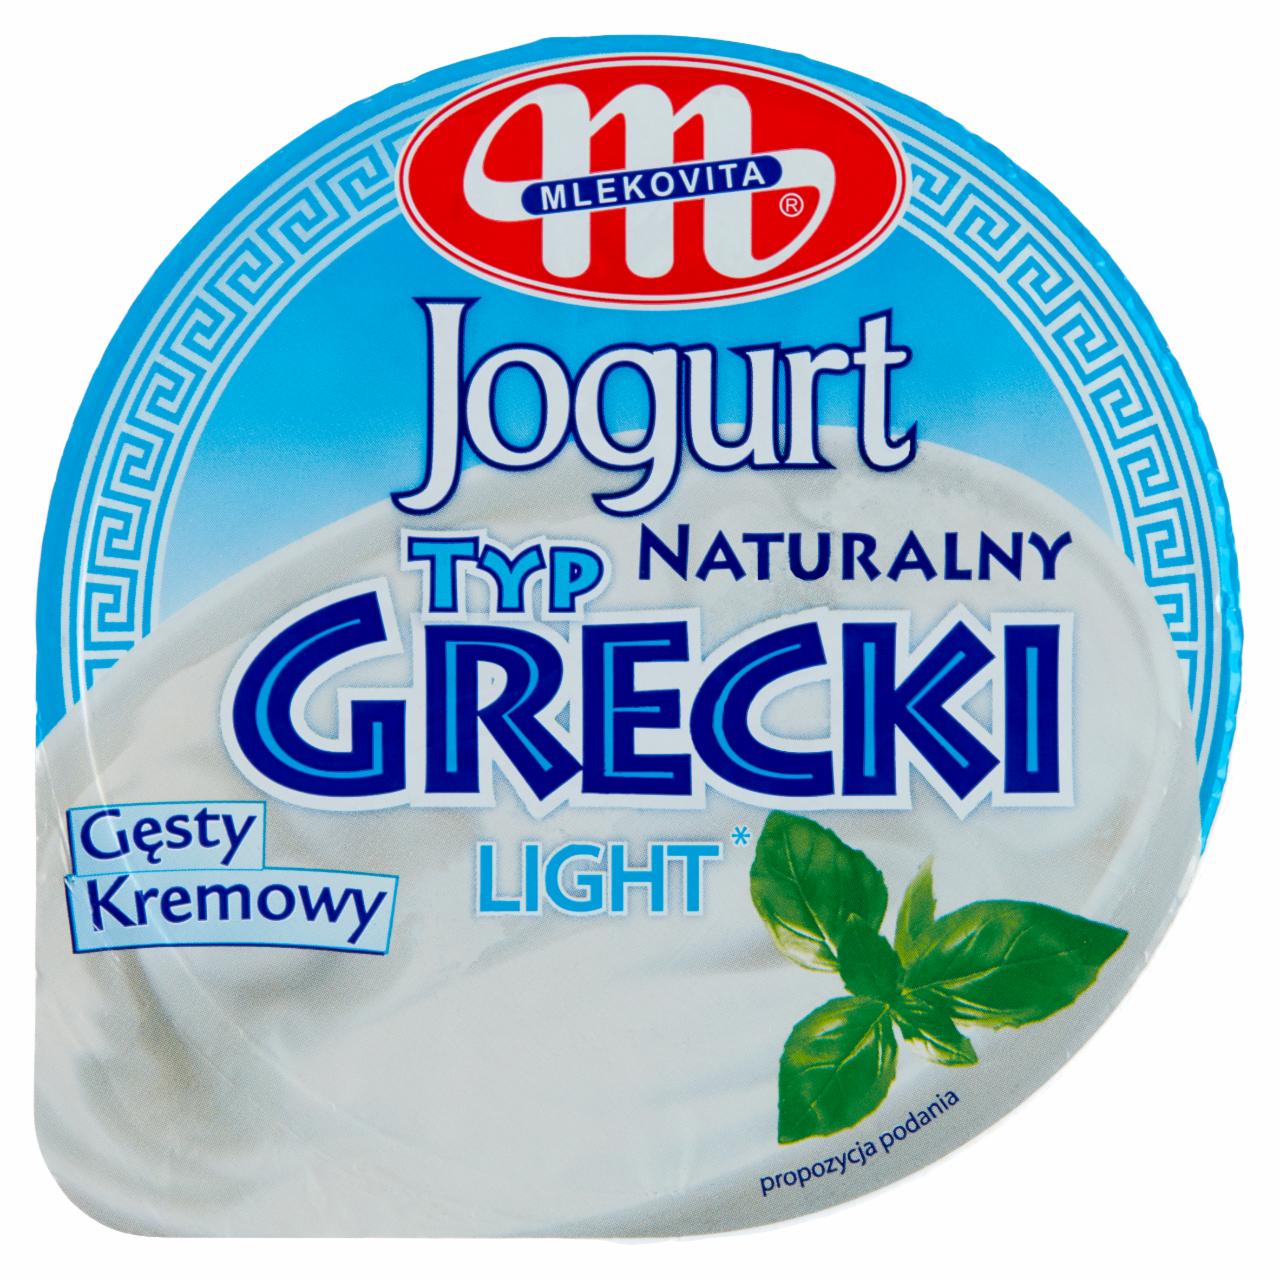 Zdjęcia - Jogurt naturalny typ grecki light Mlekovita